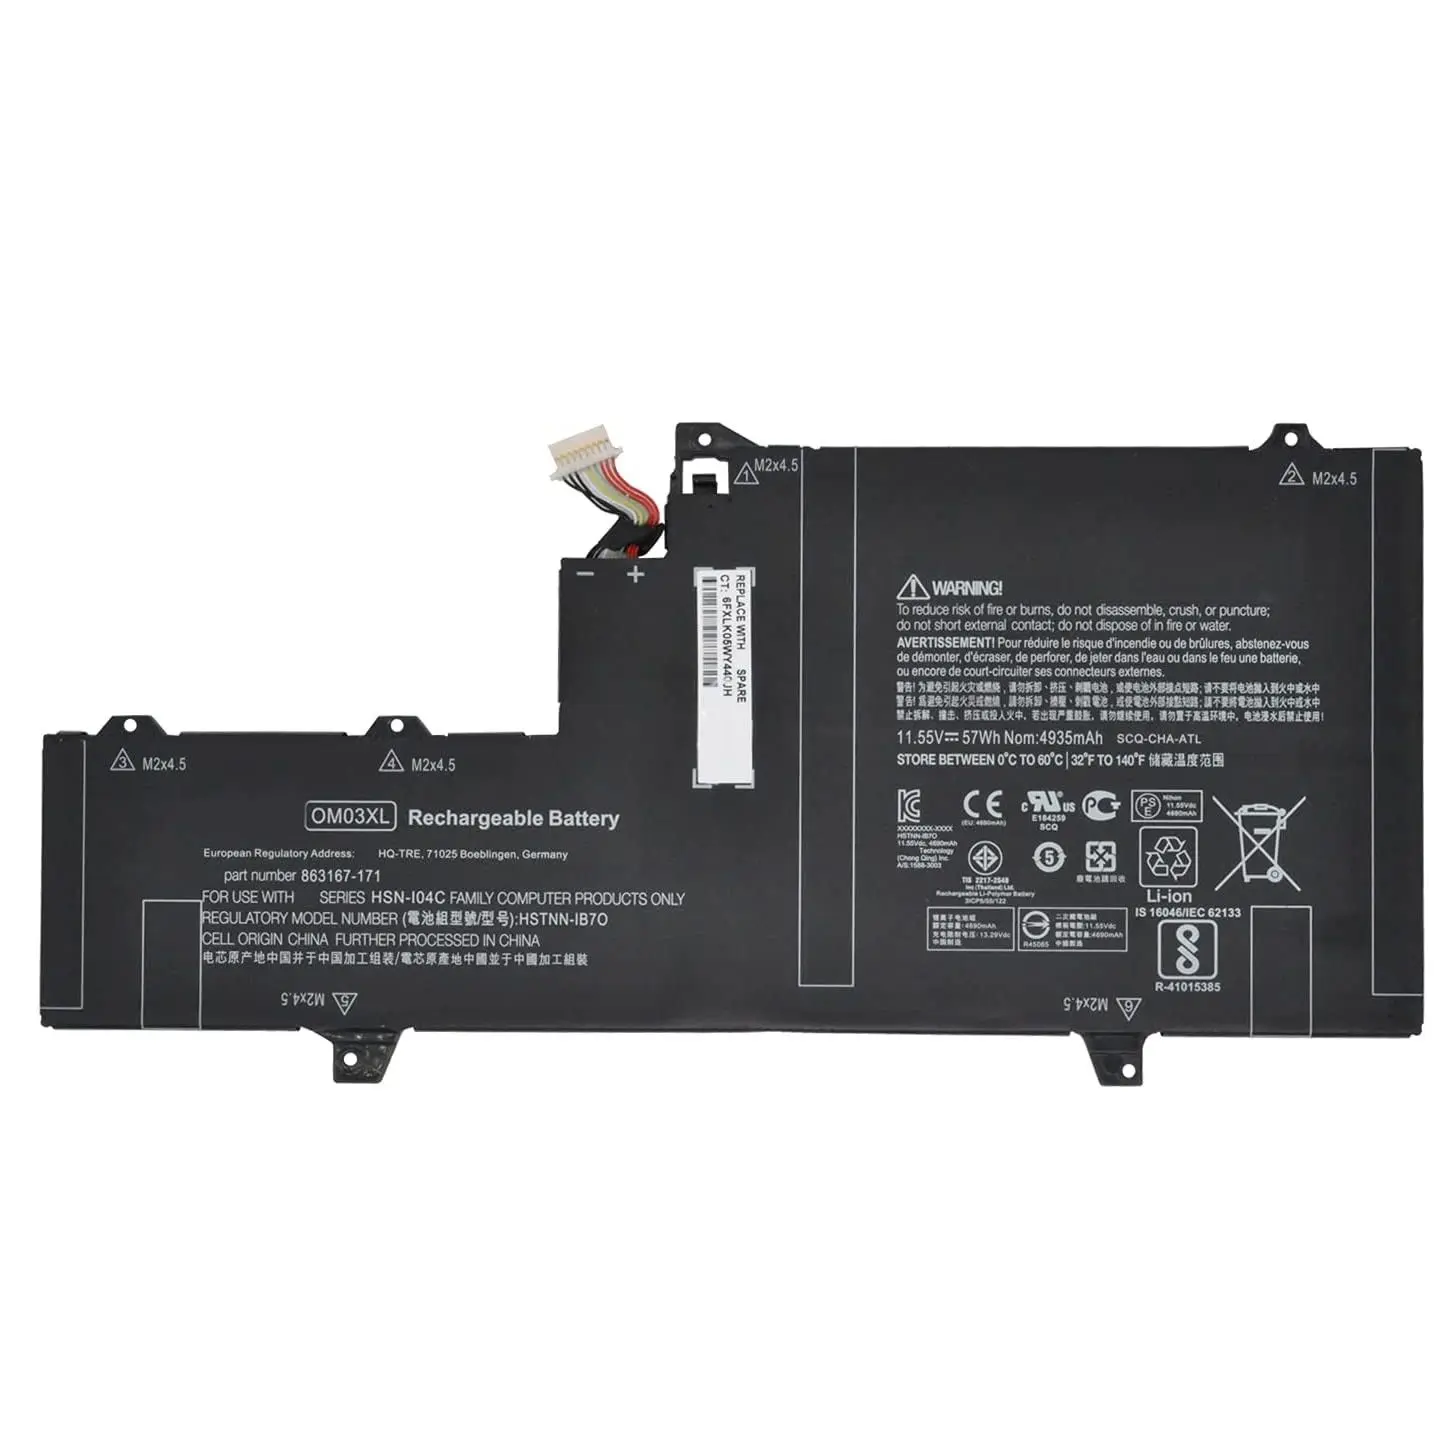 Original Battery OM03 for HP Elitebook series Batteries 3